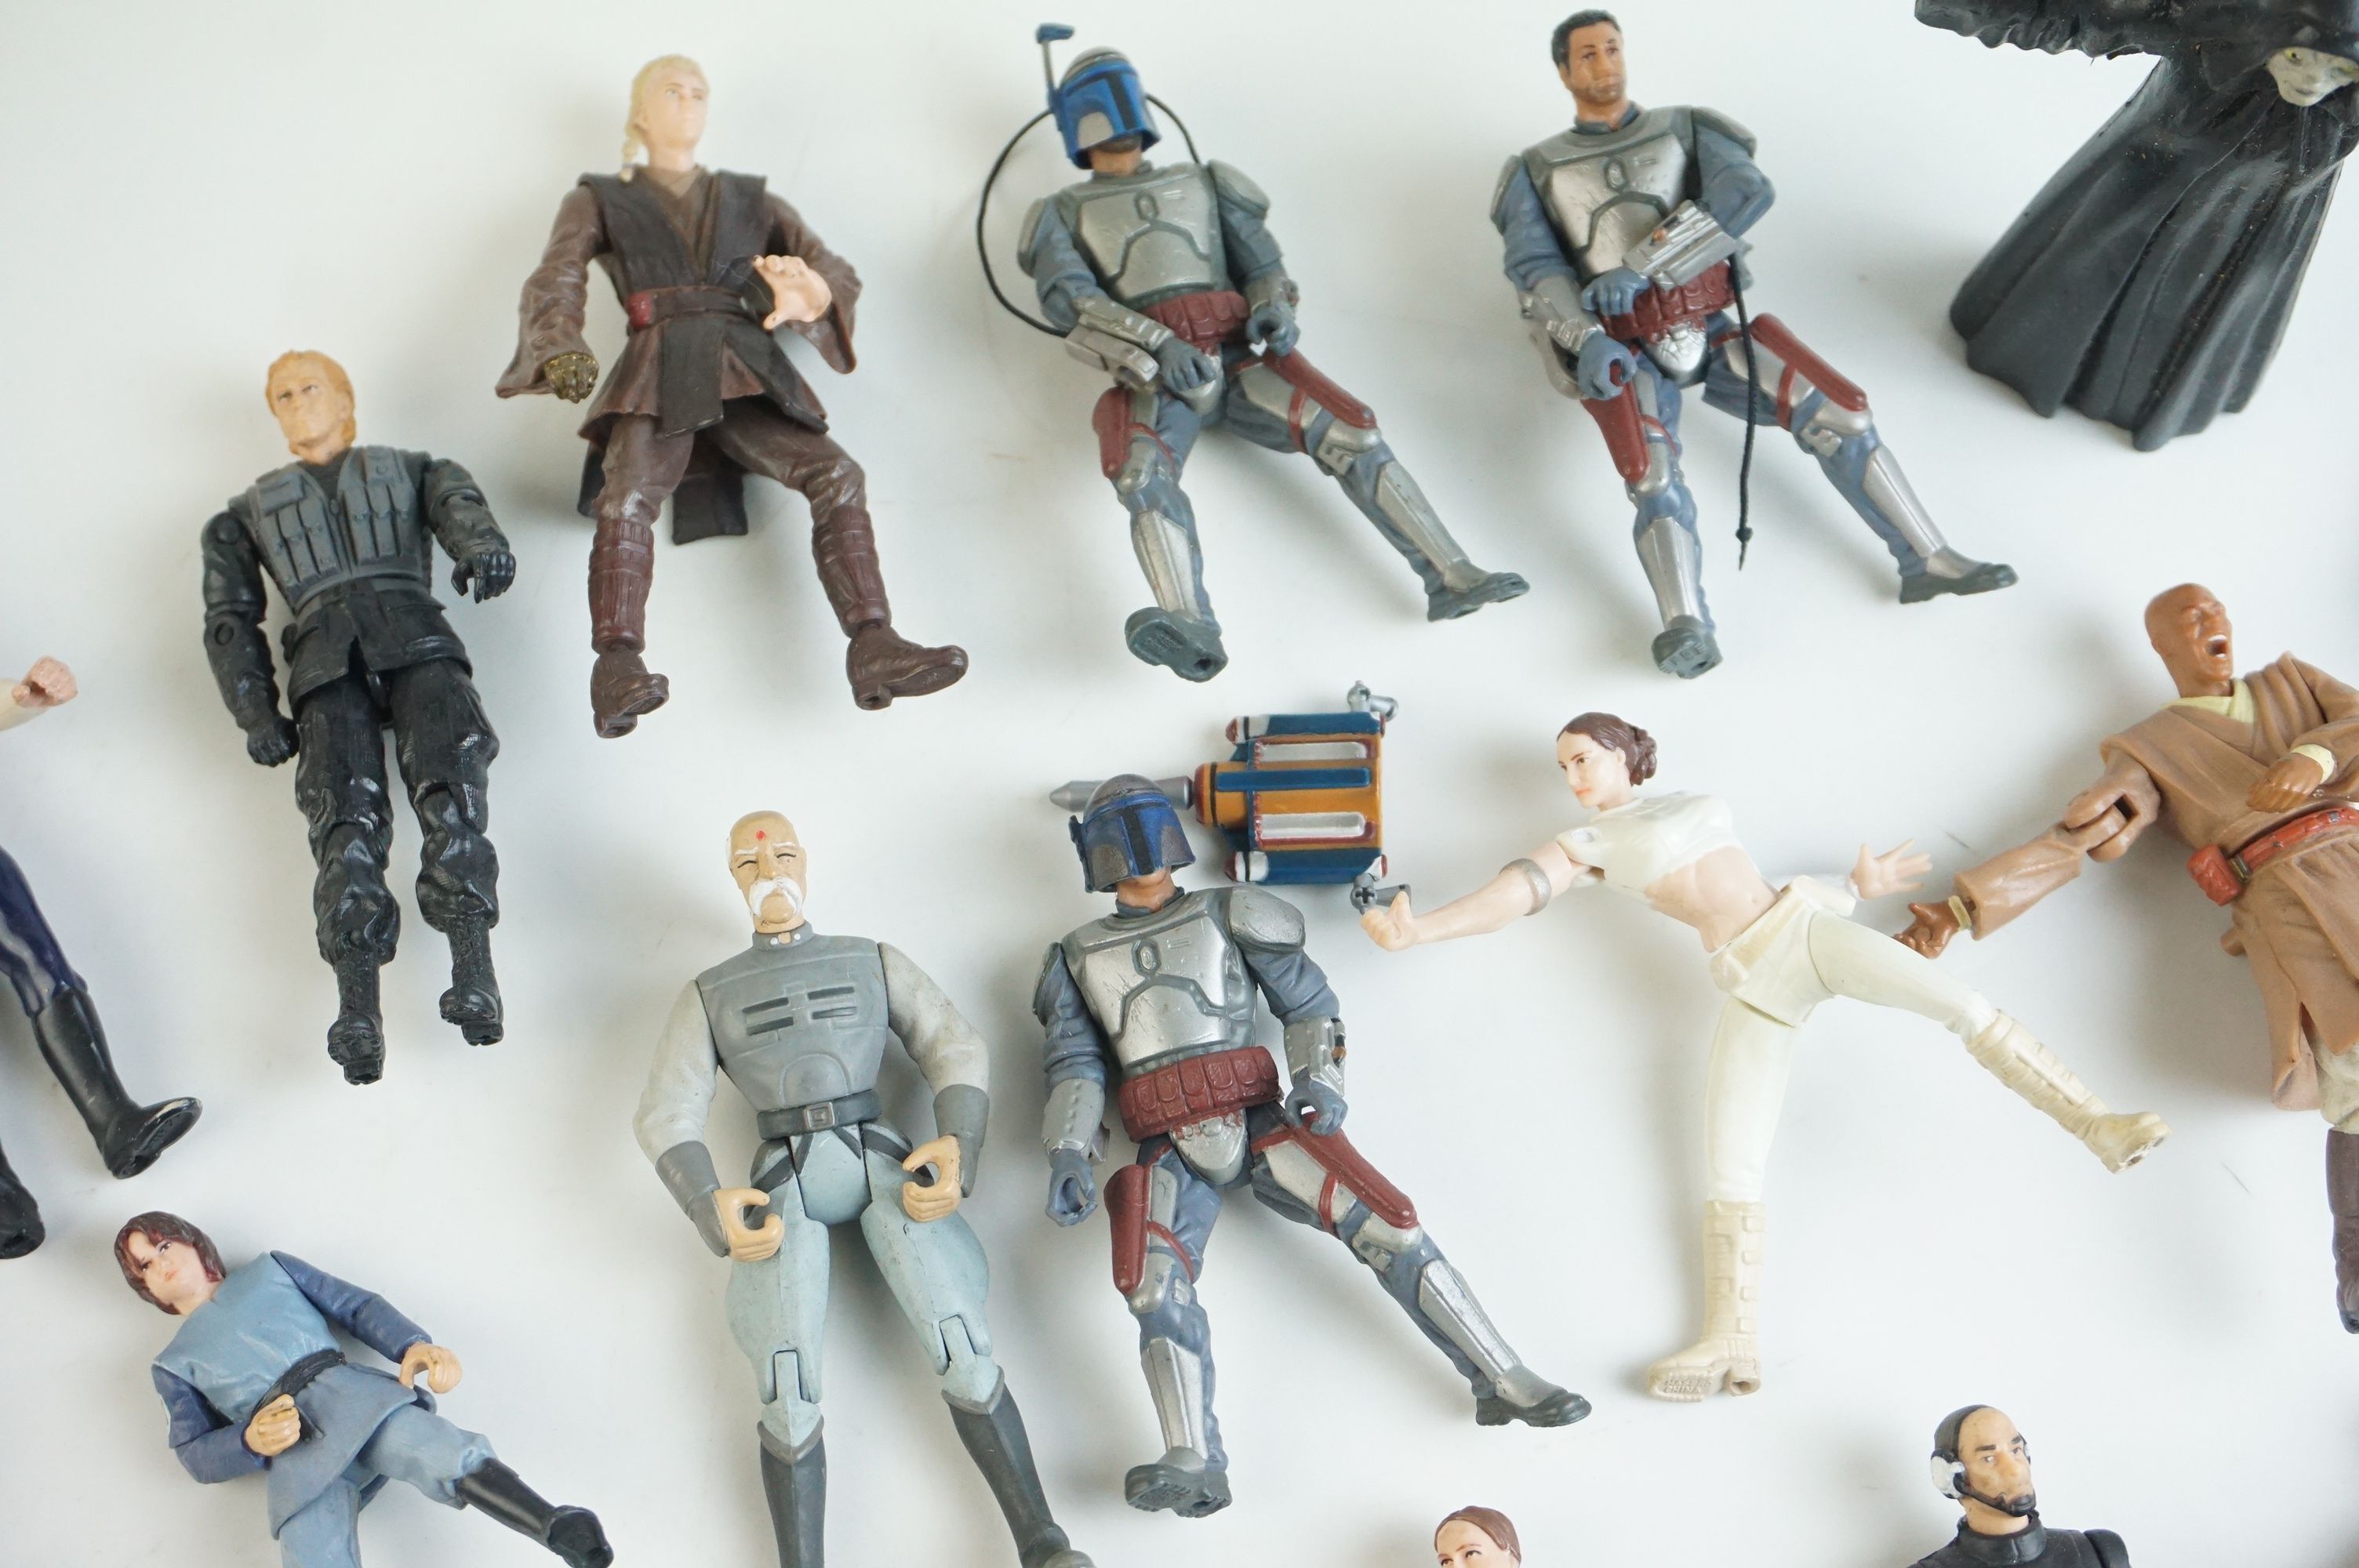 20 x Playworn Hasbro Star Wars action figures to include Mace Windu, Jango Fett, Anakin Skywalker, - Image 6 of 8